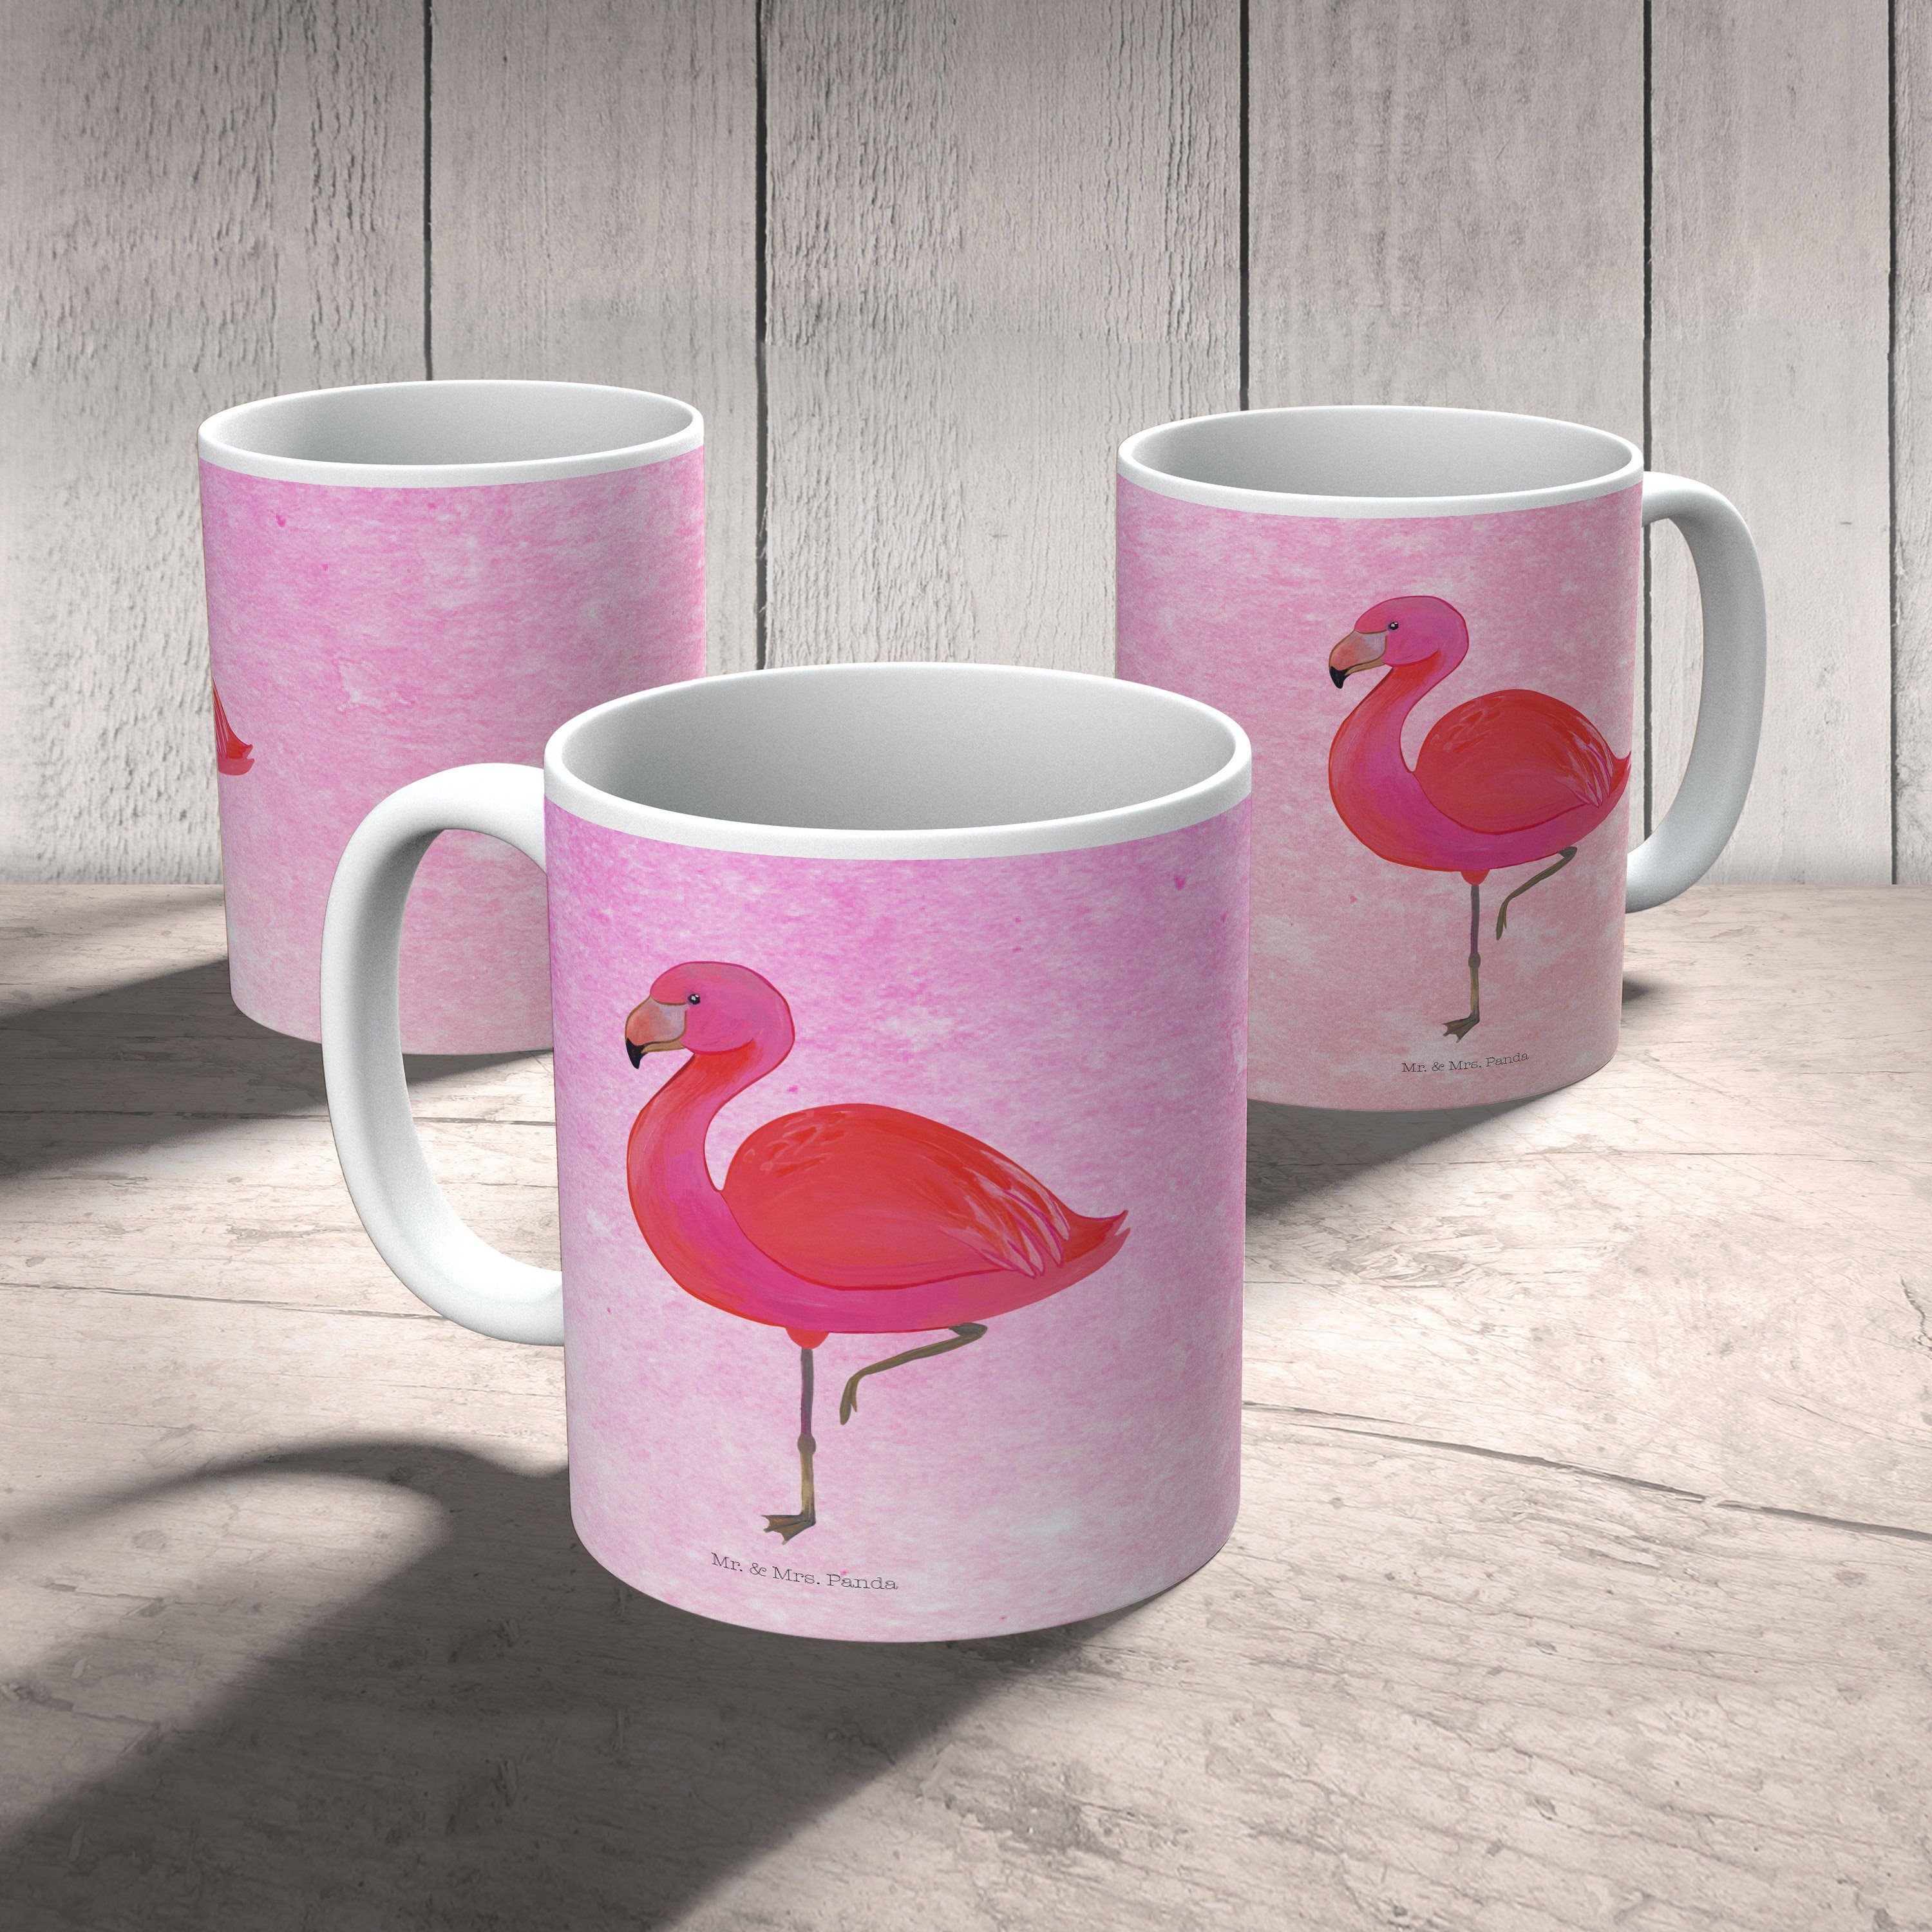 Mr. & Mrs. rosa, Pink Panda glücklich, - Kinderbecher classic Kunststoff für Flamingo - mic, Aquarell Geschenk